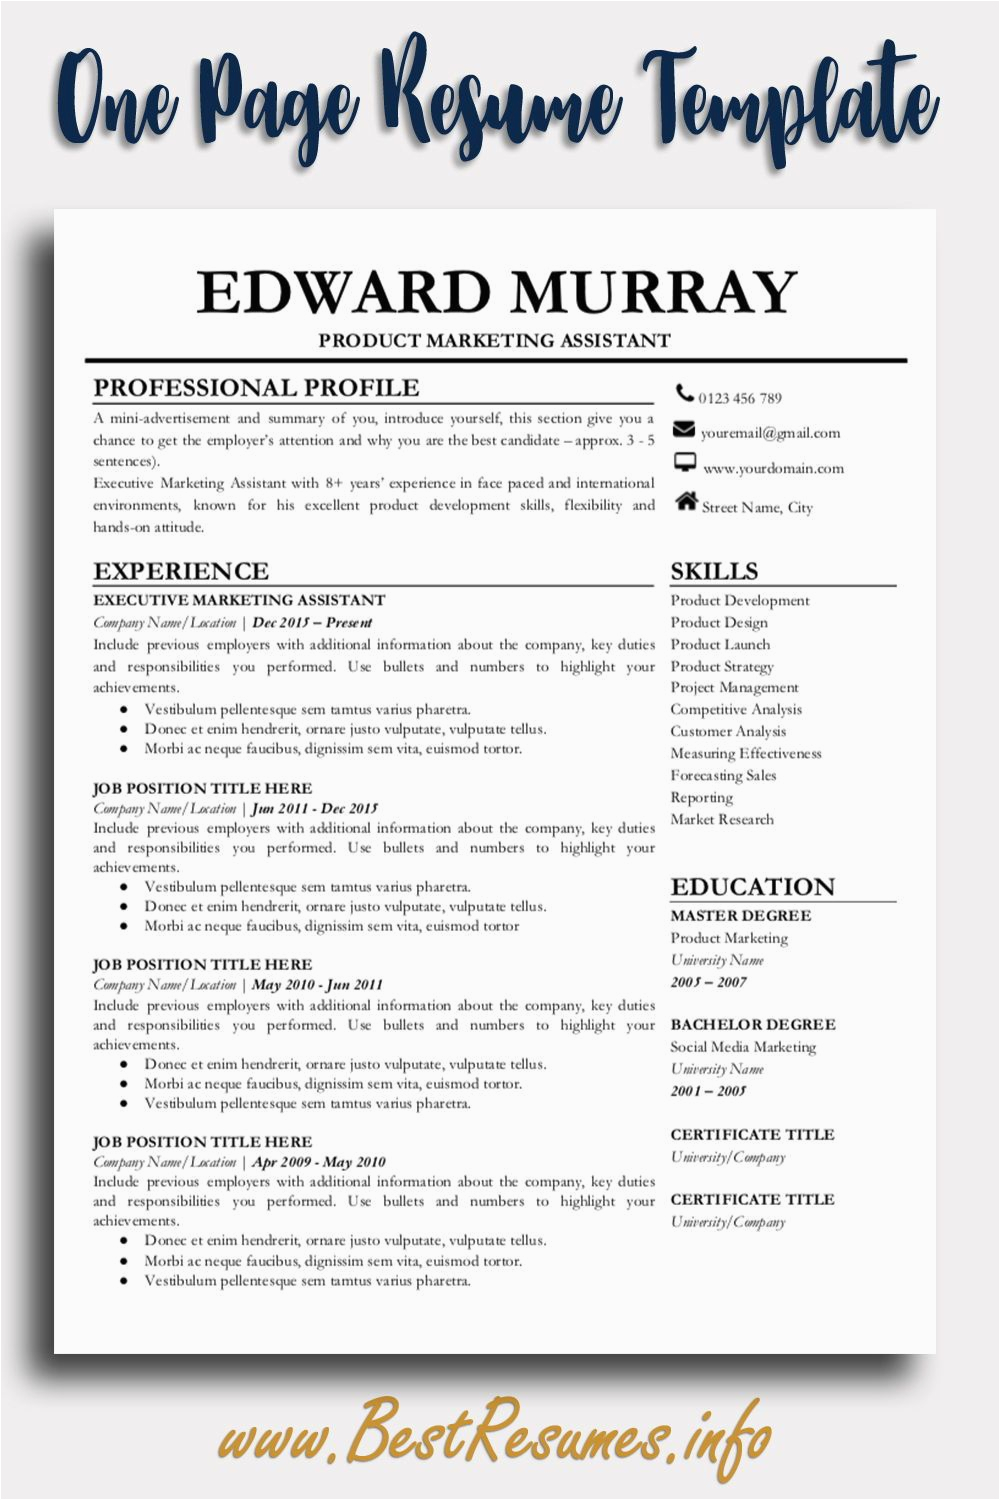 best teacher resume templates of professional resume template edward murray bestresumes